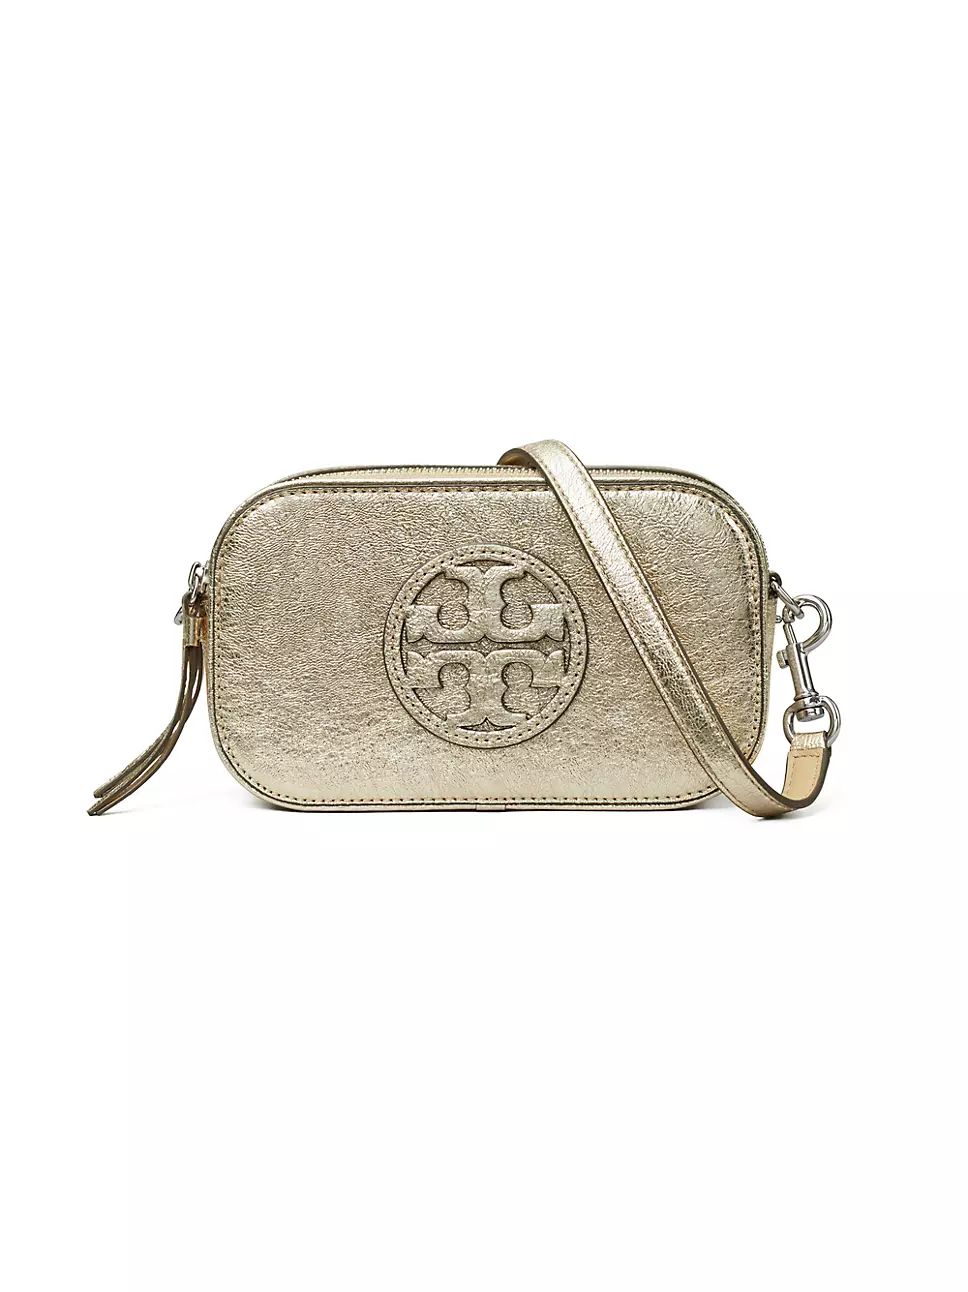 Tory Burch Mini Miller Metallic Leather Crossbody Bag | Saks Fifth Avenue